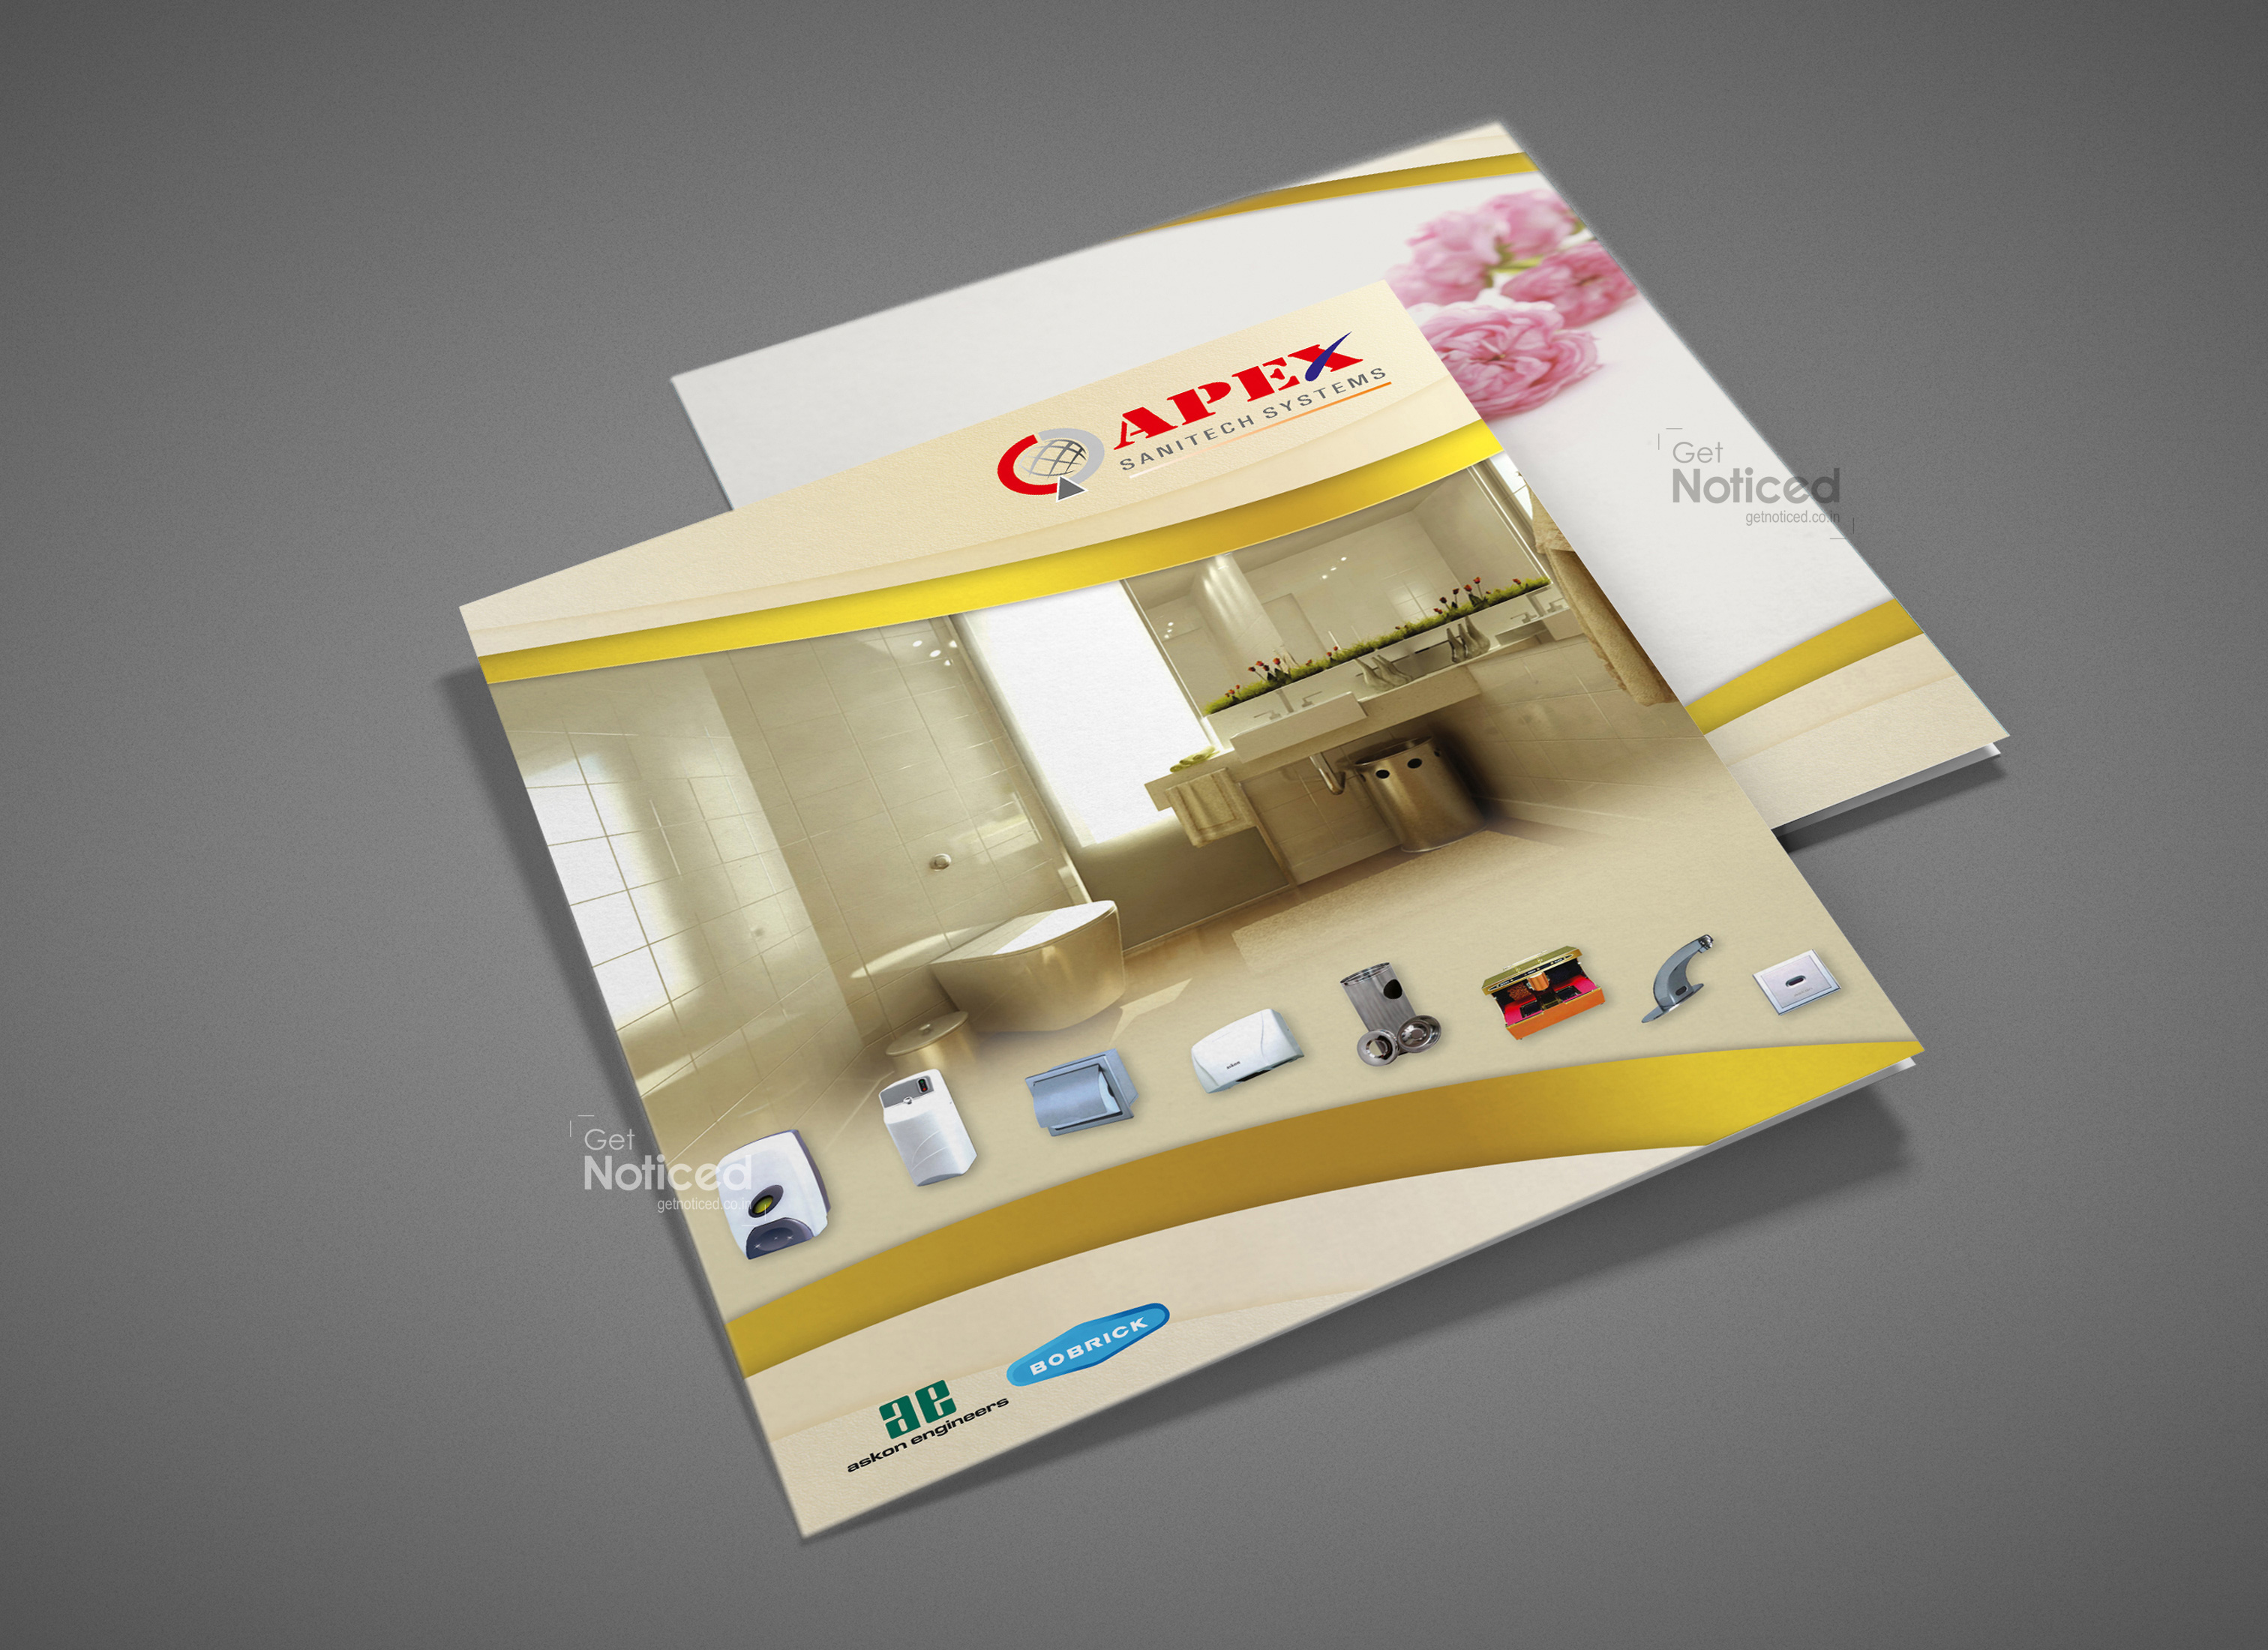 Apex Sanitech Systems Product Catalogue Design